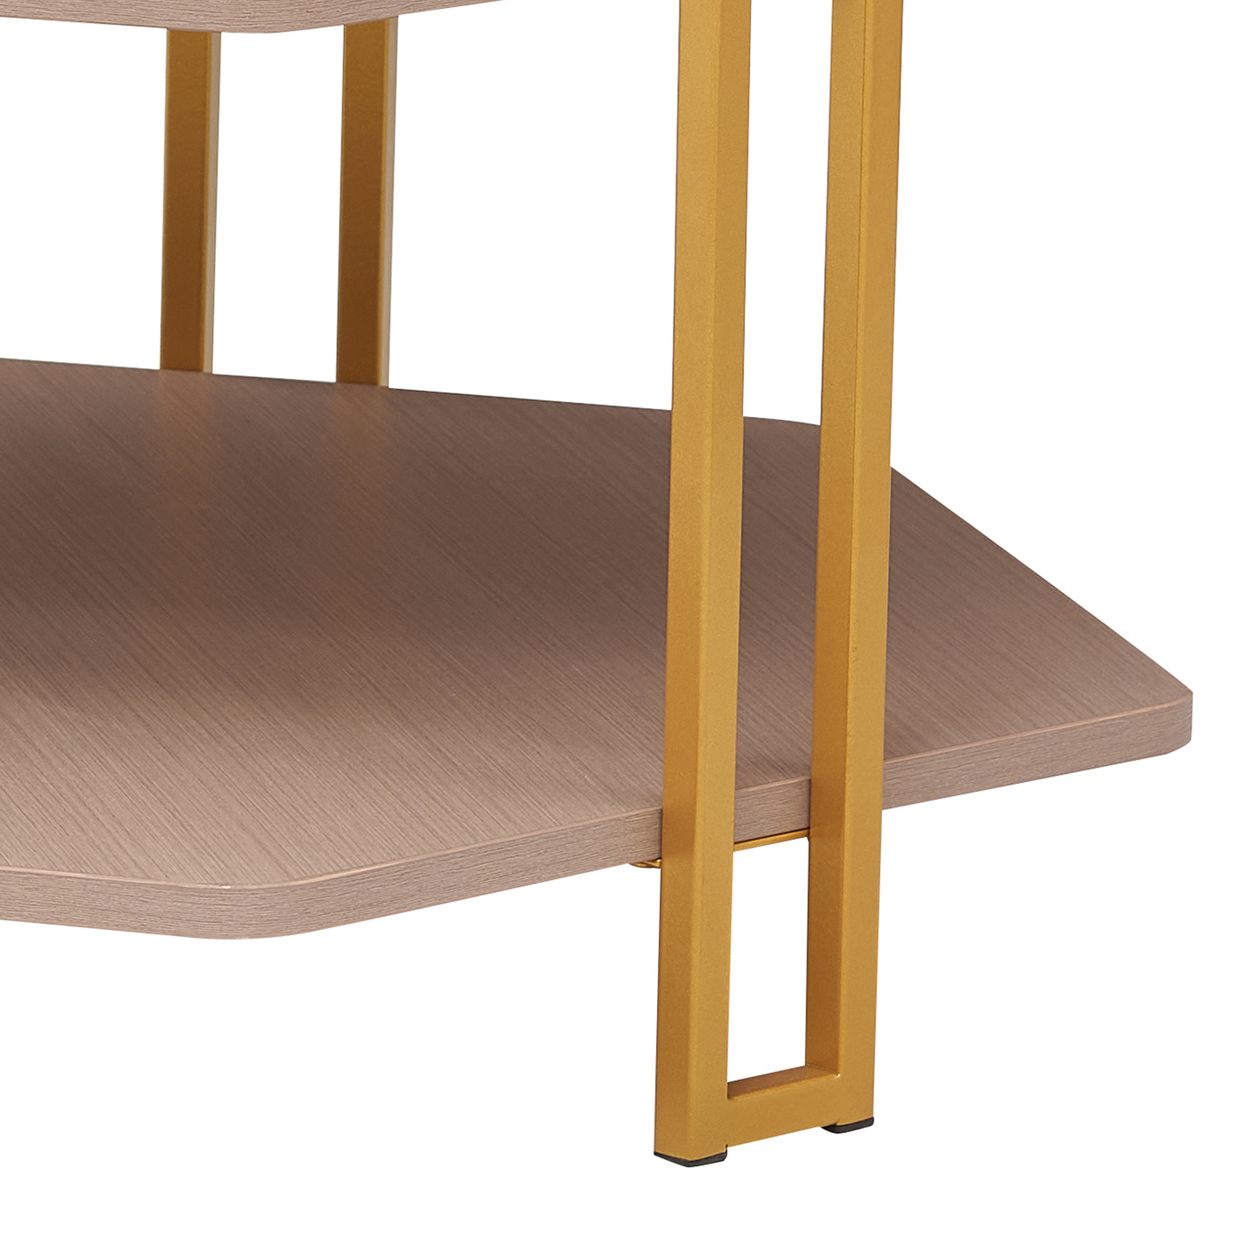 36 Inch Hexagonal Modern Coffee Table, Wood Top And Shelf, Gold Metal Legs